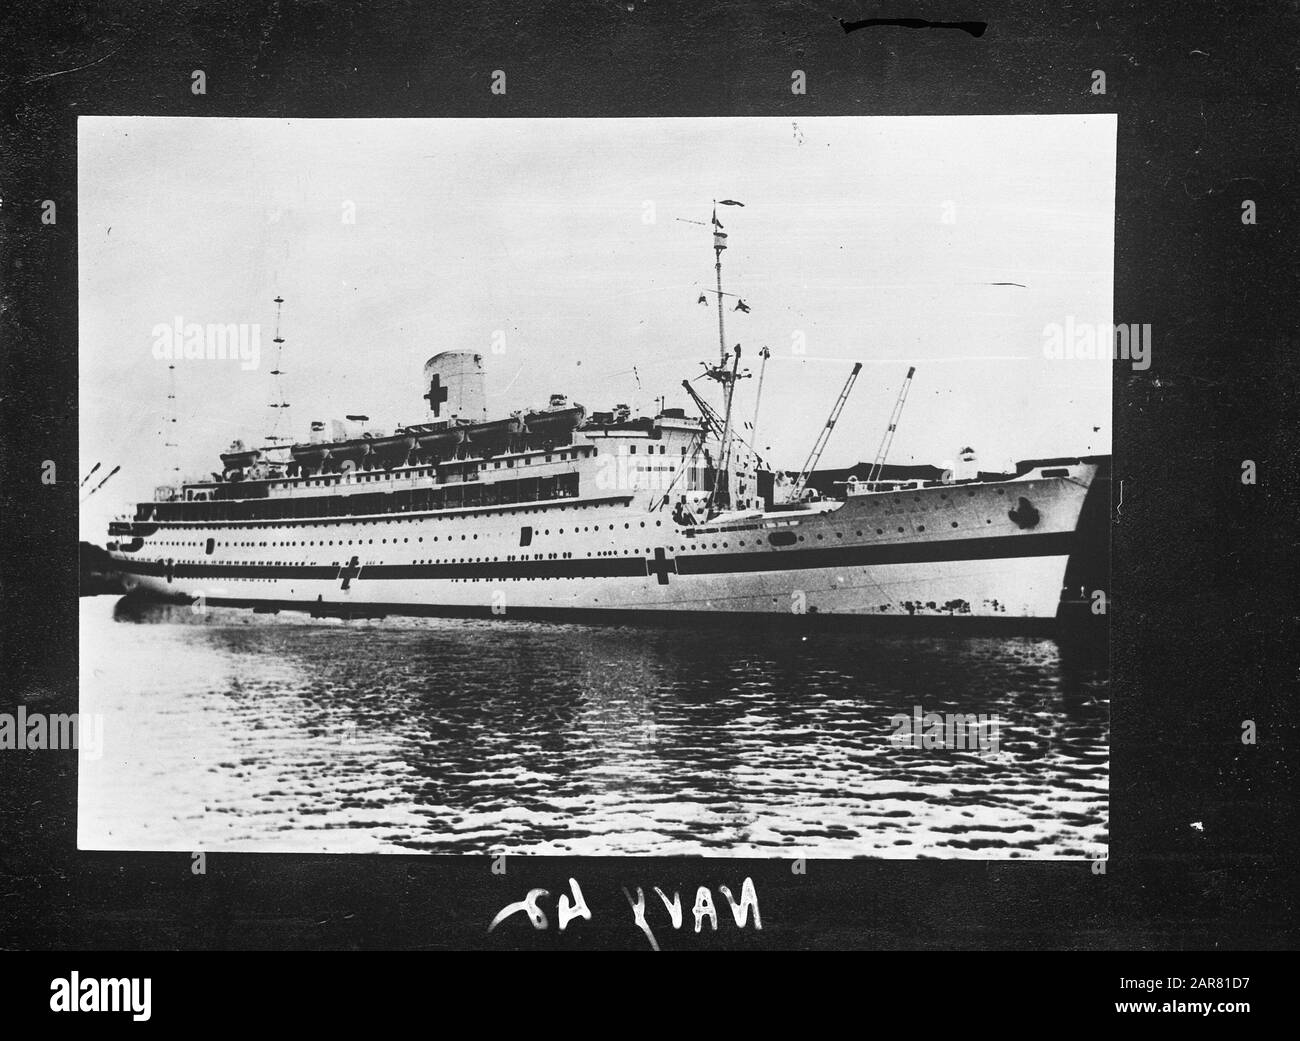 M.S. Oranje van Stoomvaart Maatschappij Nederland employed as a hospital ship at the Australian Navy Date: 1940-1945 Keywords: hospital ships, navy, passenger ships, second world war Stock Photo